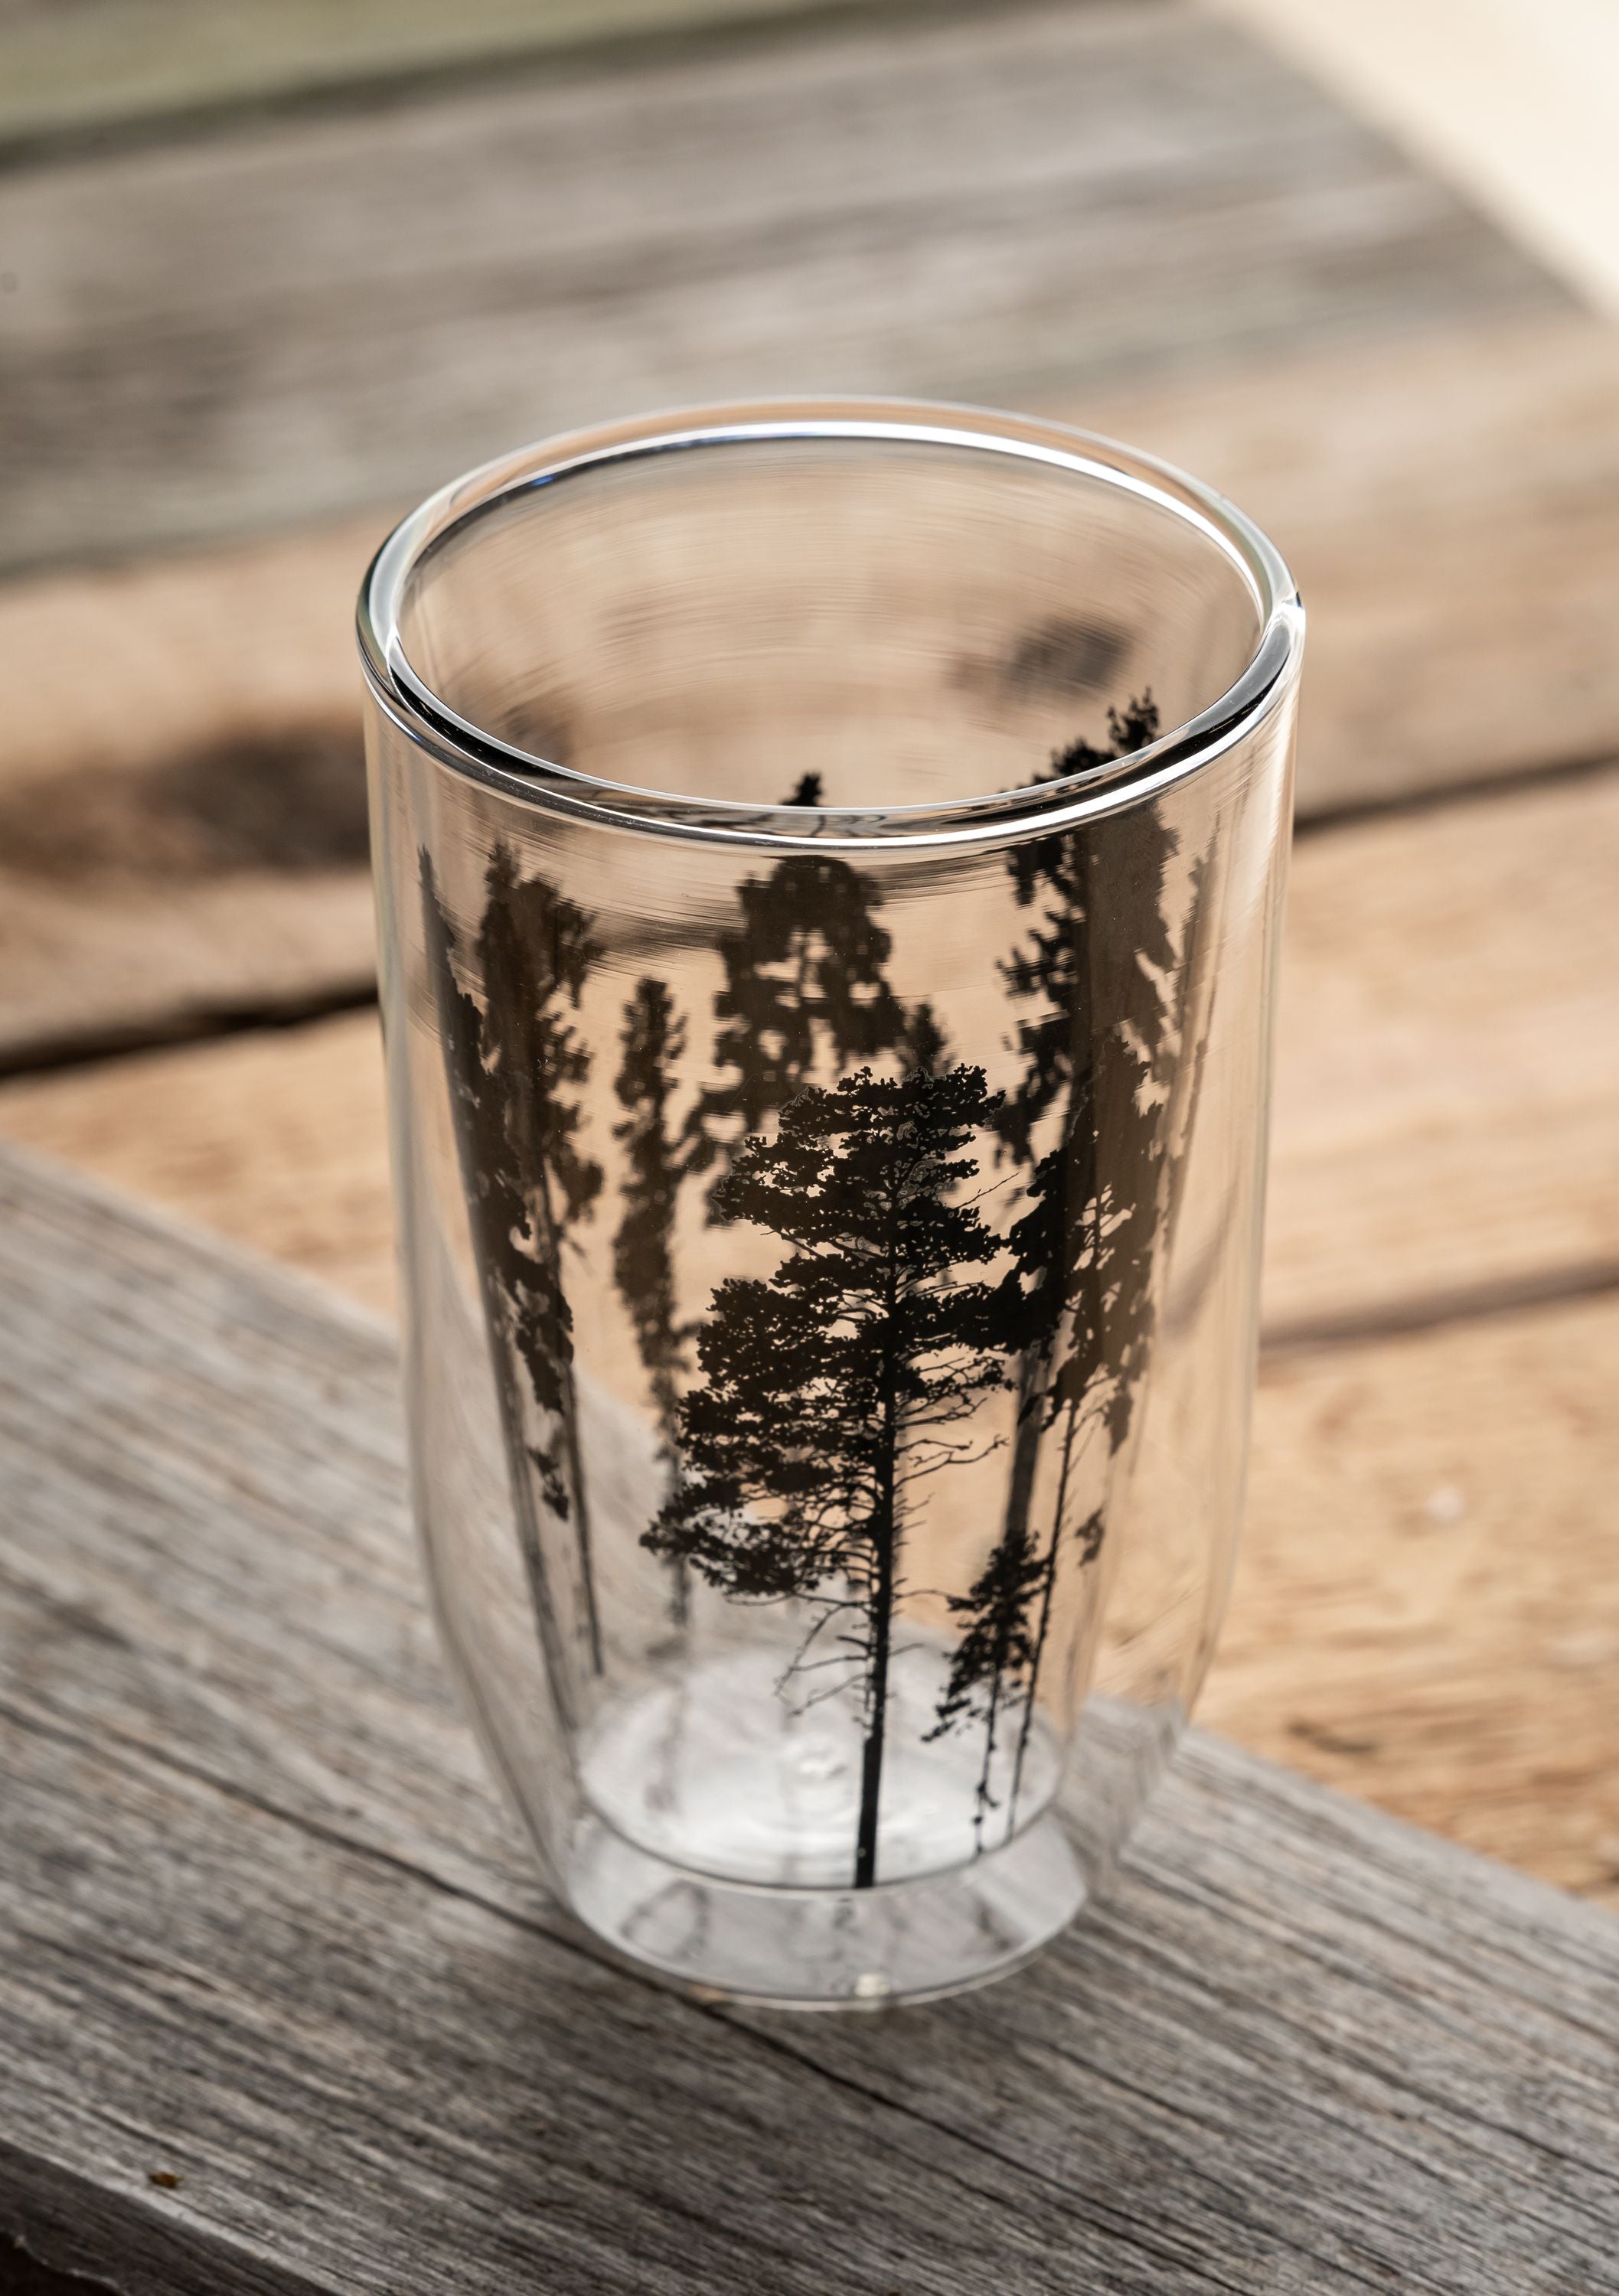 Muurla glas til varme drikke skoven